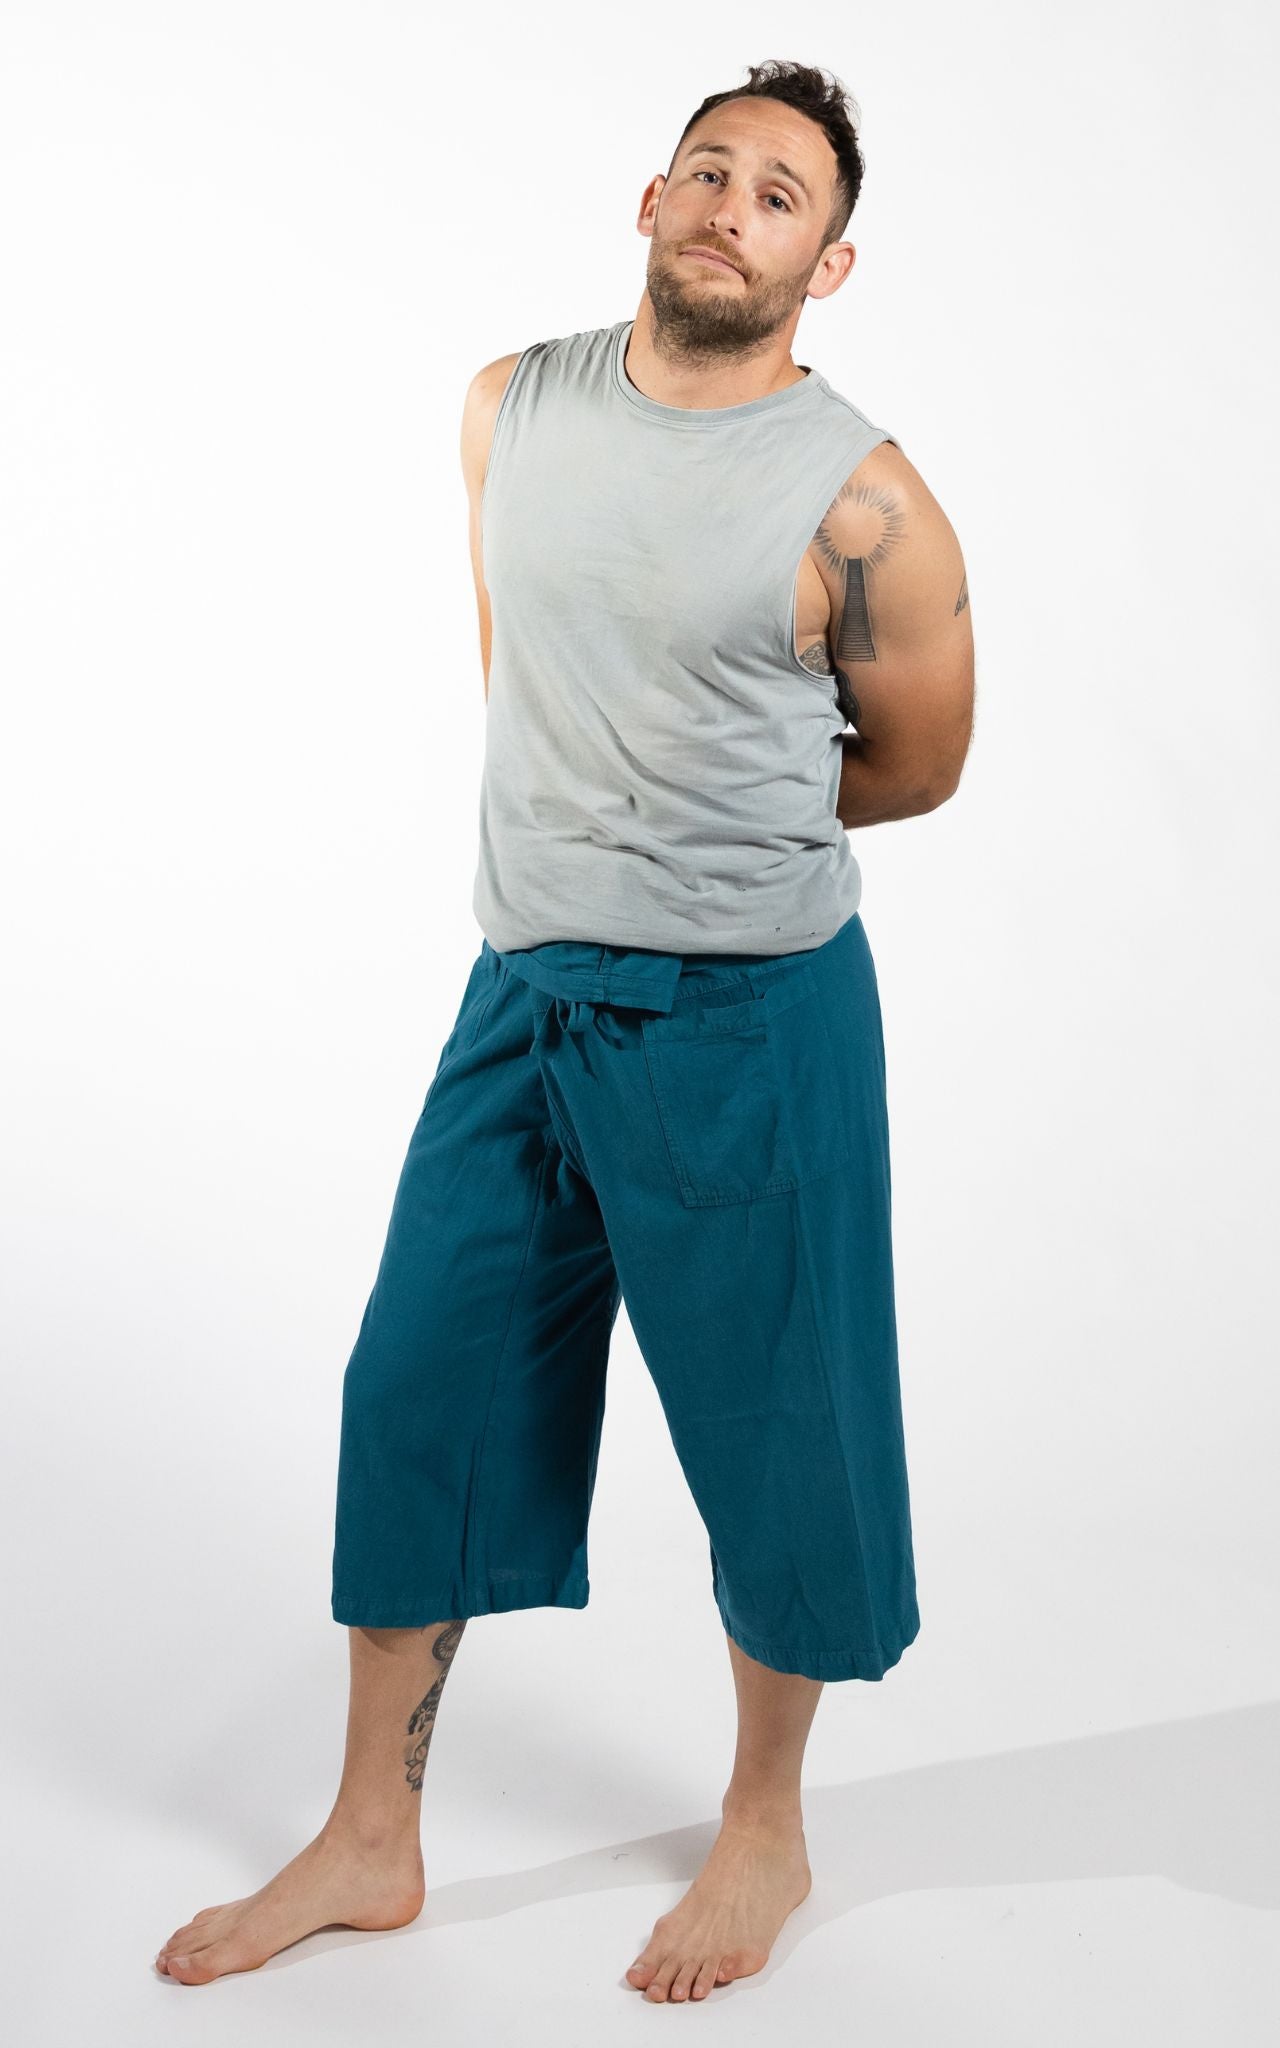 Surya Australia Ethical Cotton Thai Fisherman Shorts - Turquoise